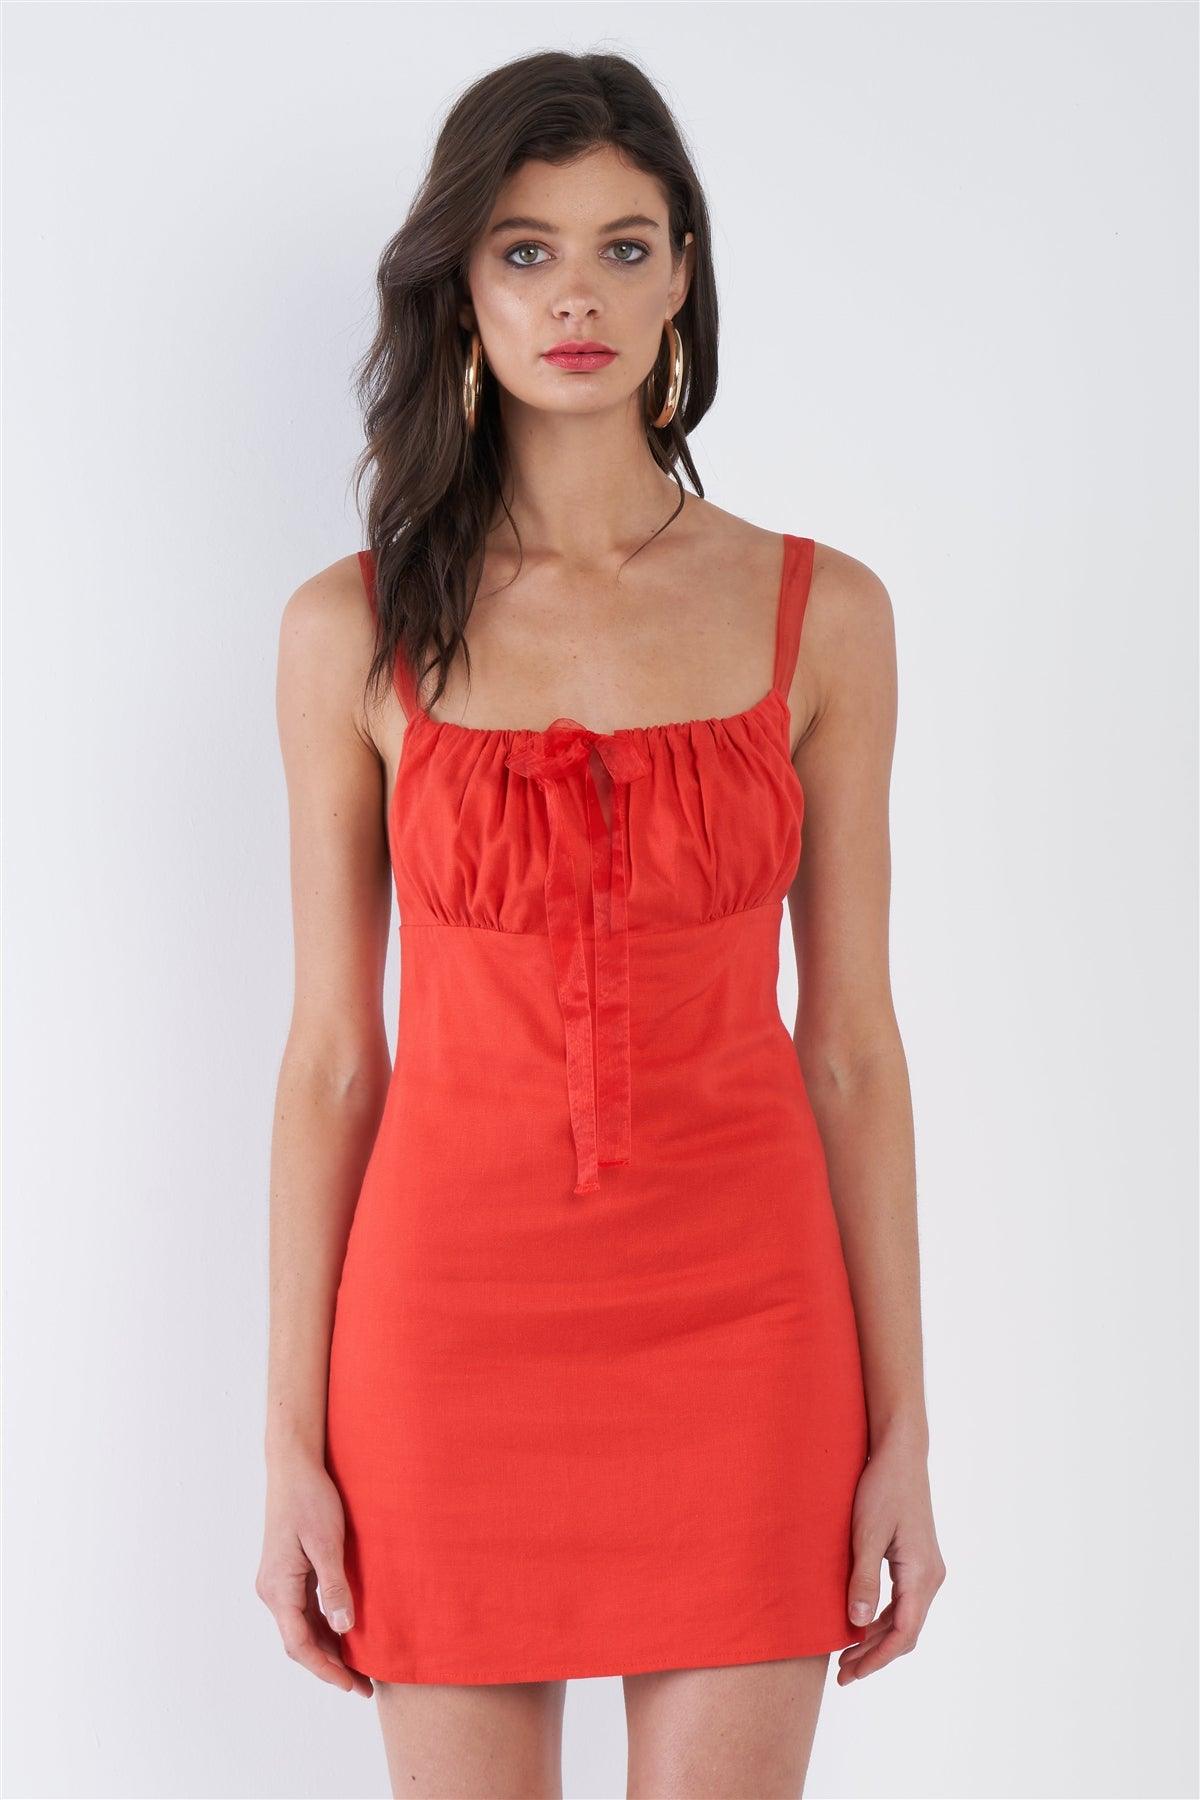 Blood Orange Red Sheer Ribbon Adjustable Strap Open Back Mini Chic Dress /3-2-1